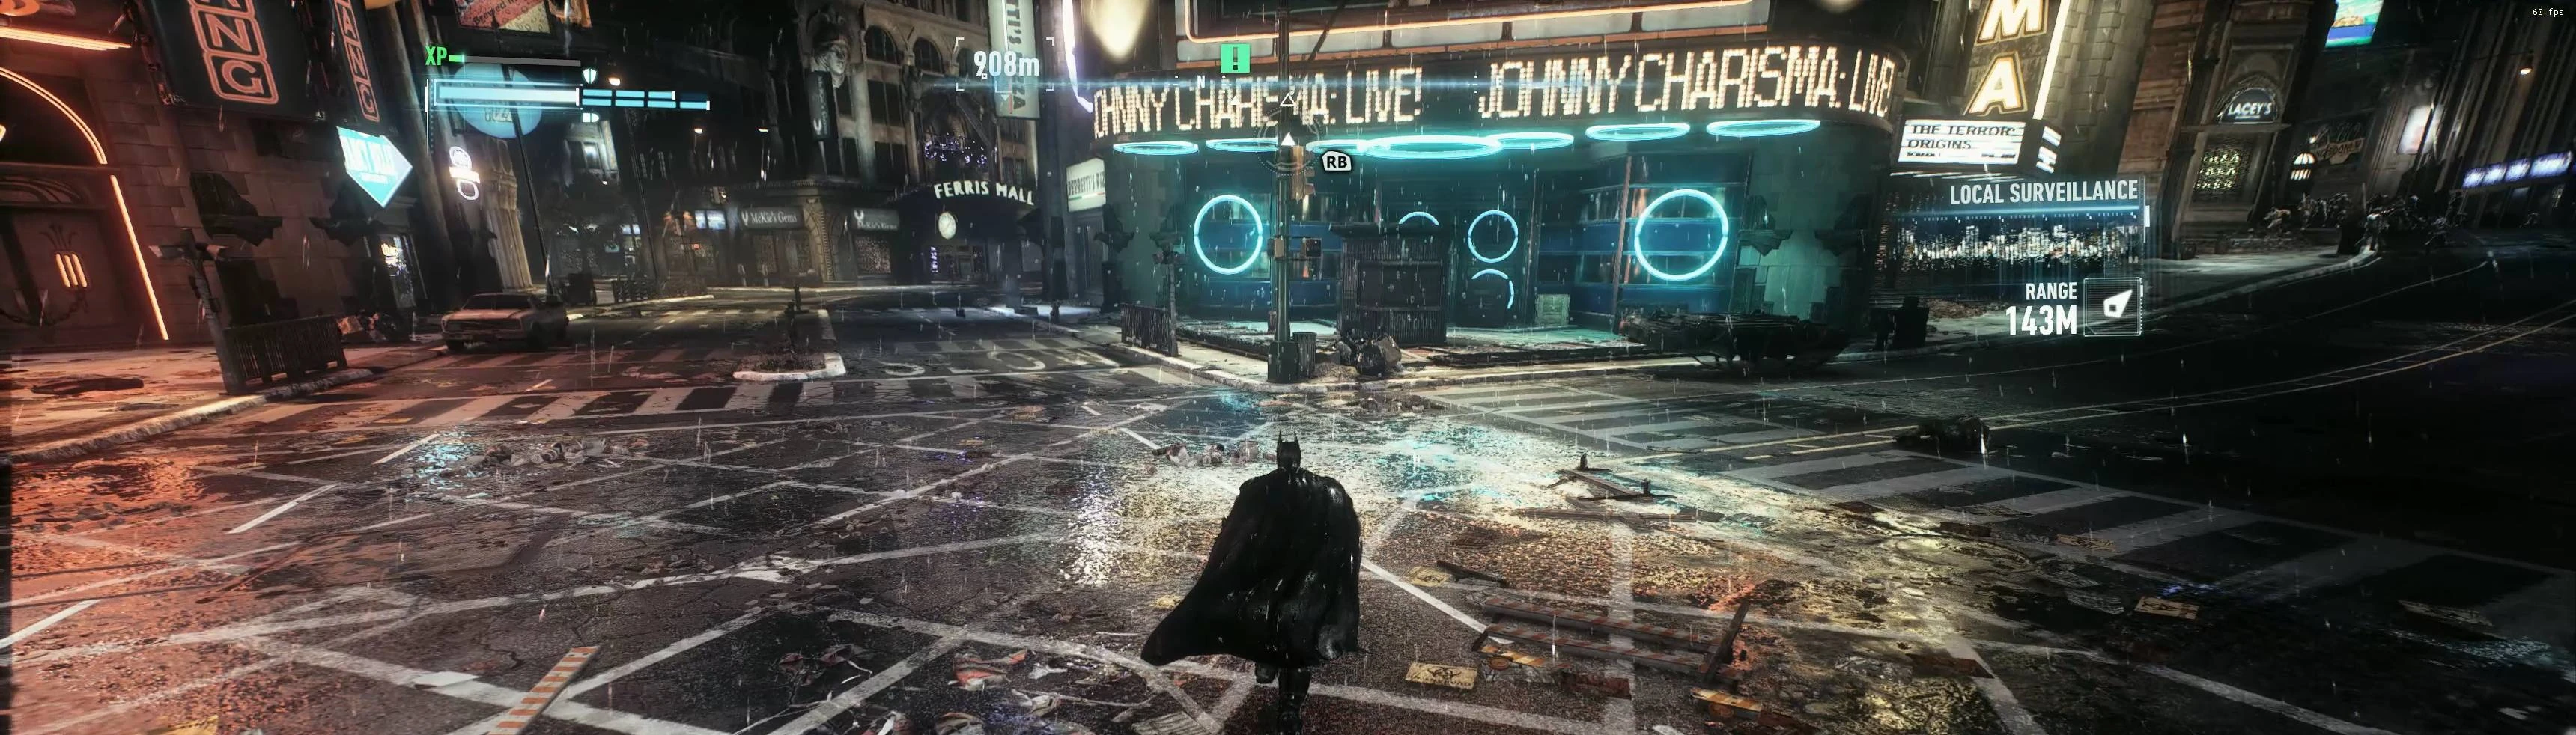 Batman: Arkham Knight 8K Ray Tracing Mod Offers Stunning Game Upgrade